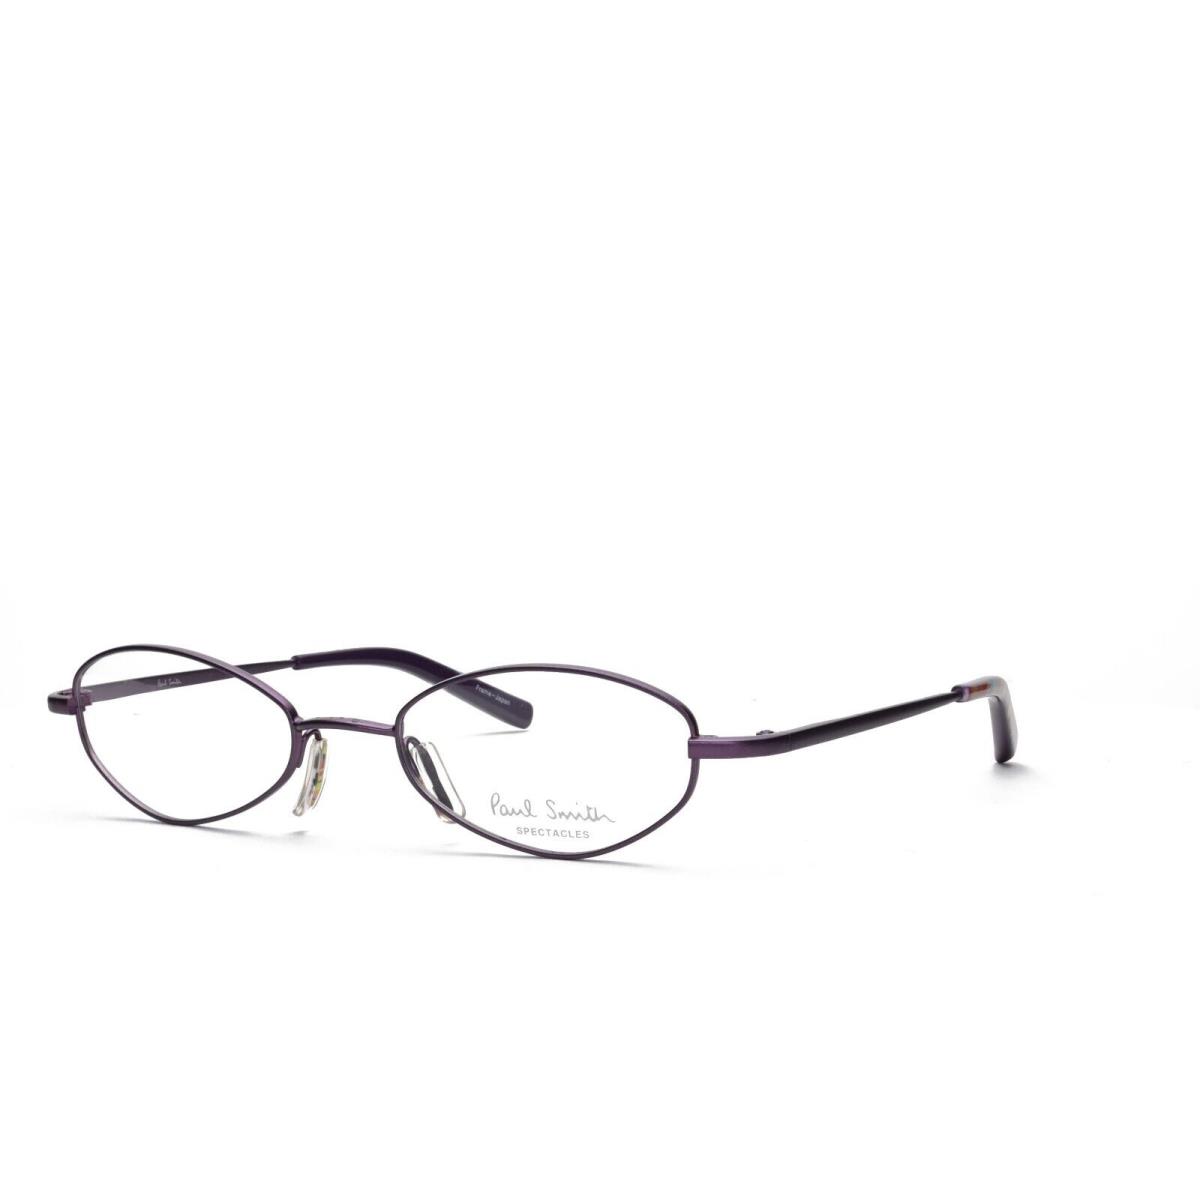 Paul Smith 198 Pur 48-19-132 Purple Vtg Vintage Eyeglasses Frames